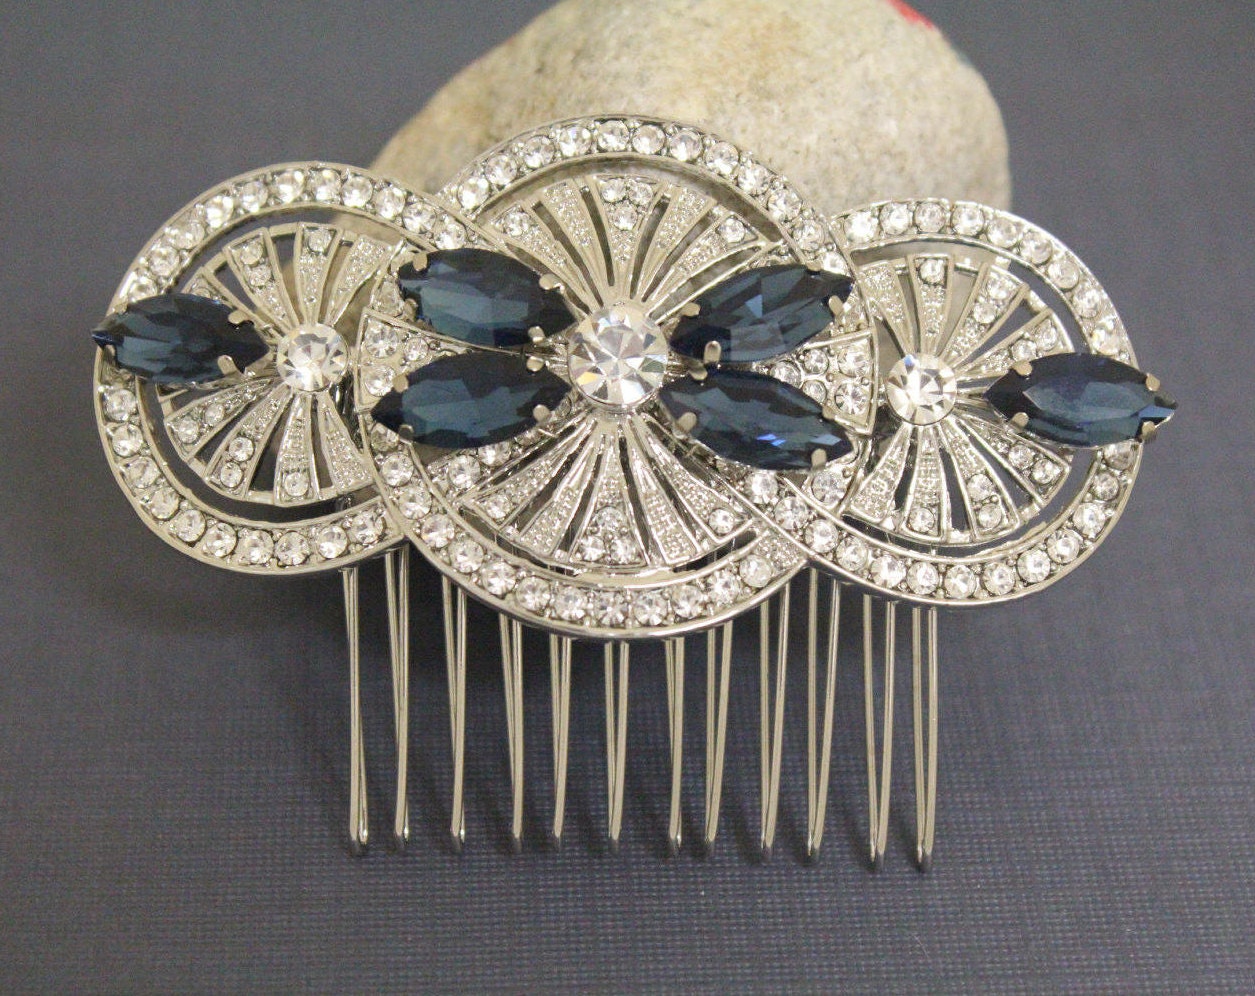 6 Pack Vintage Hair Side Combs for Women Decorative, ECANGO Retro Gold  Pearl Rhinestone Metal Hair